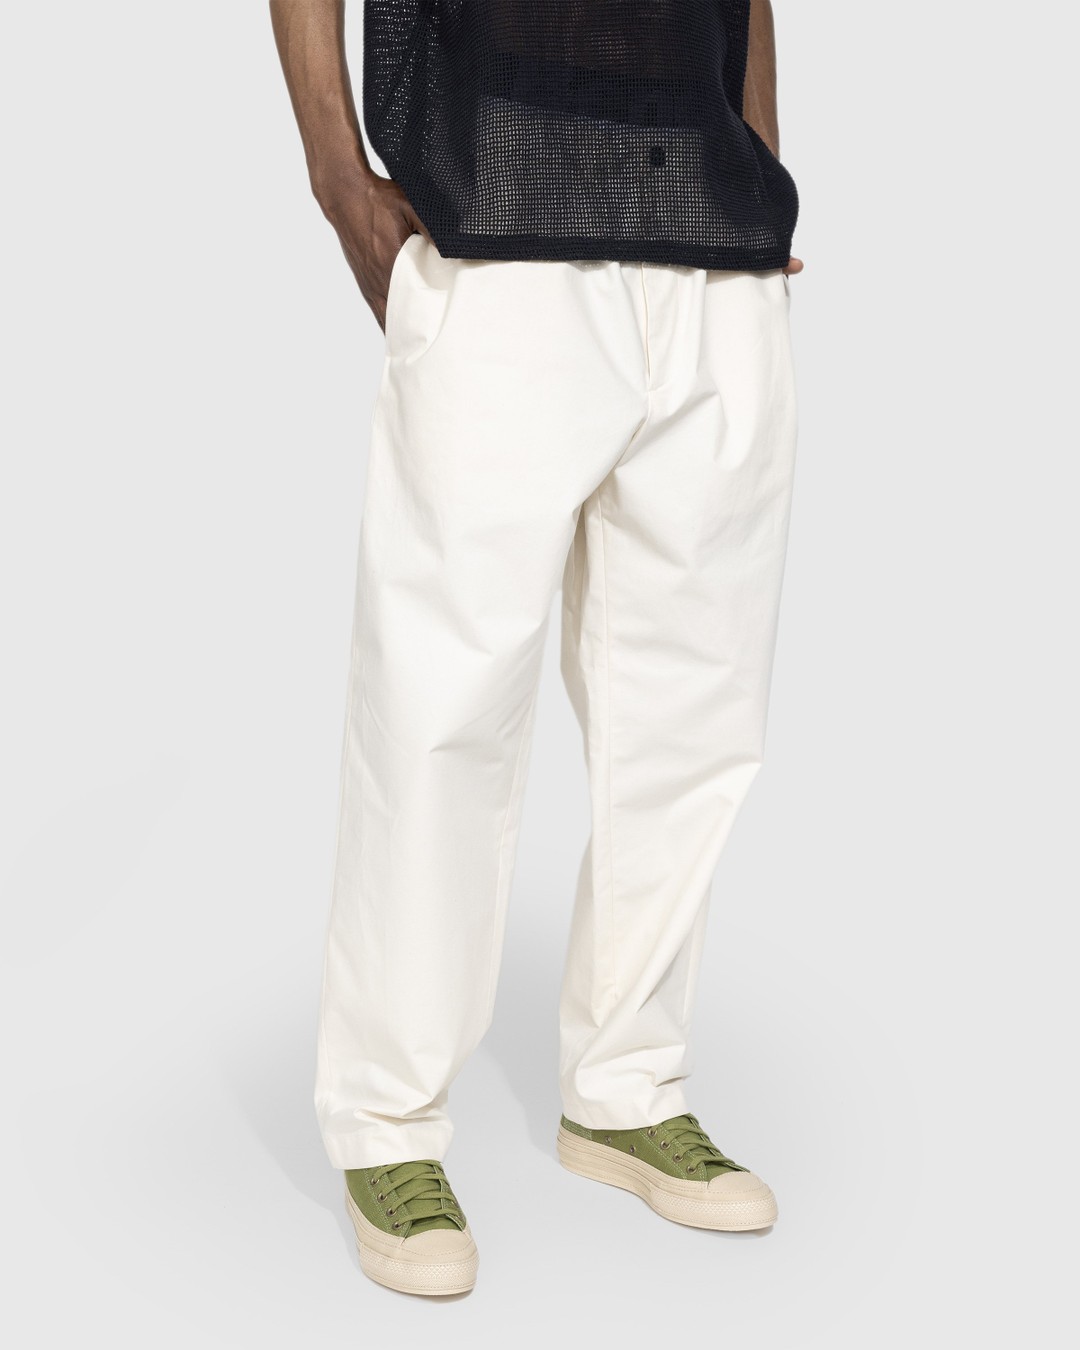 Jil Sander – Cropped Straight Leg Trousers Beige - Pants - Beige - Image 2